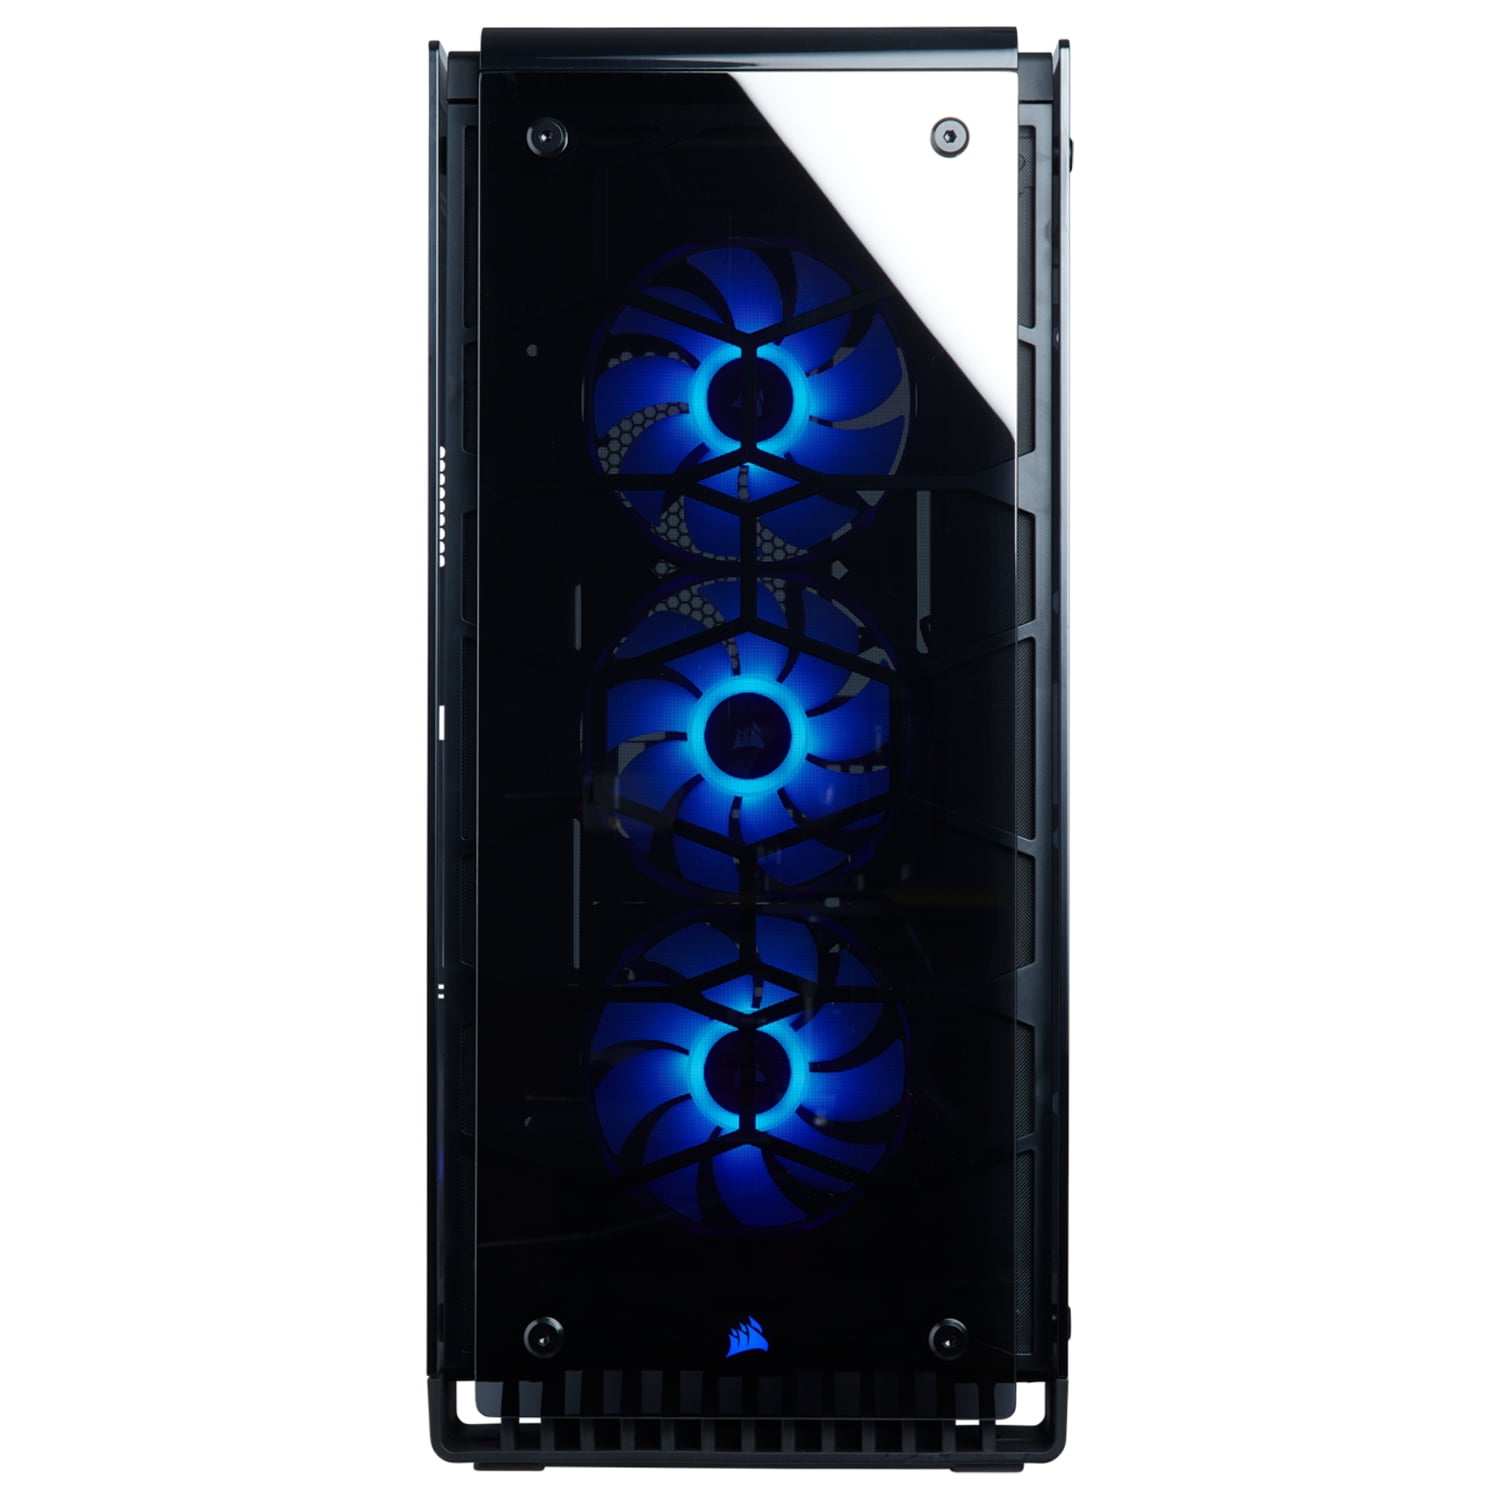 CORSAIR Boitier PC Crystal Series 570X RGB Mirror Black Tempered Glass,  Premium ATX Mid Tower Case (